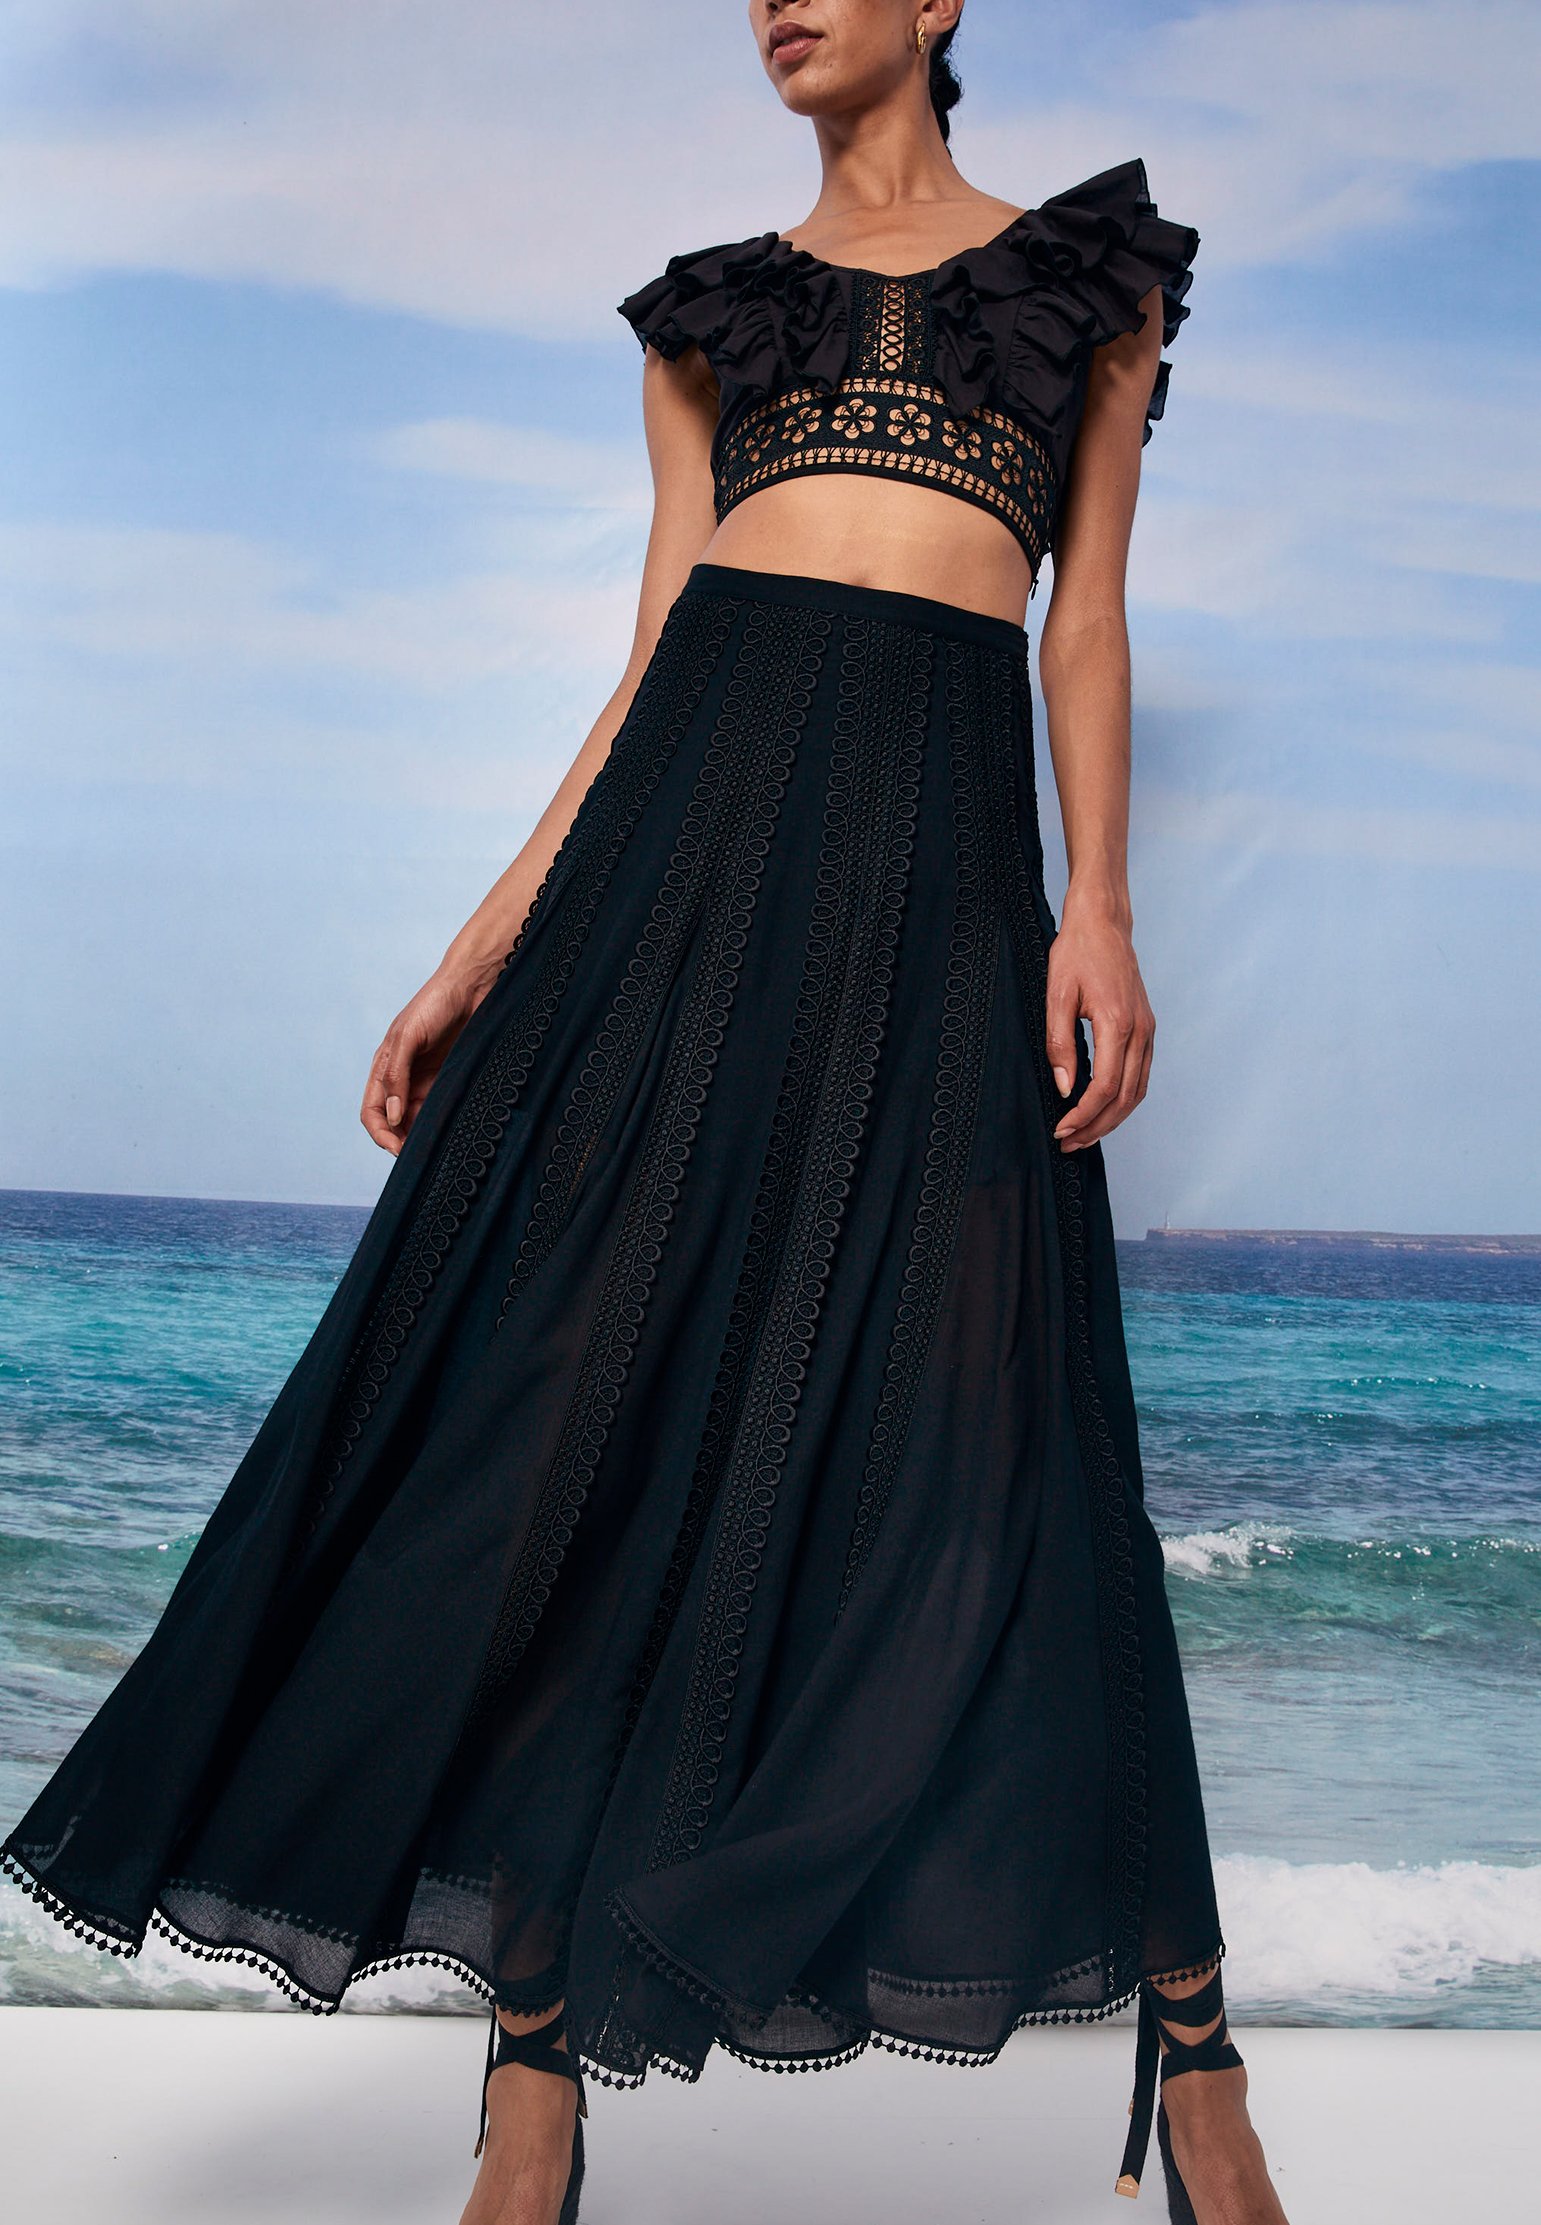 Skirt CHARO RUIZ Color: black (Code: 2063) in online store Allure